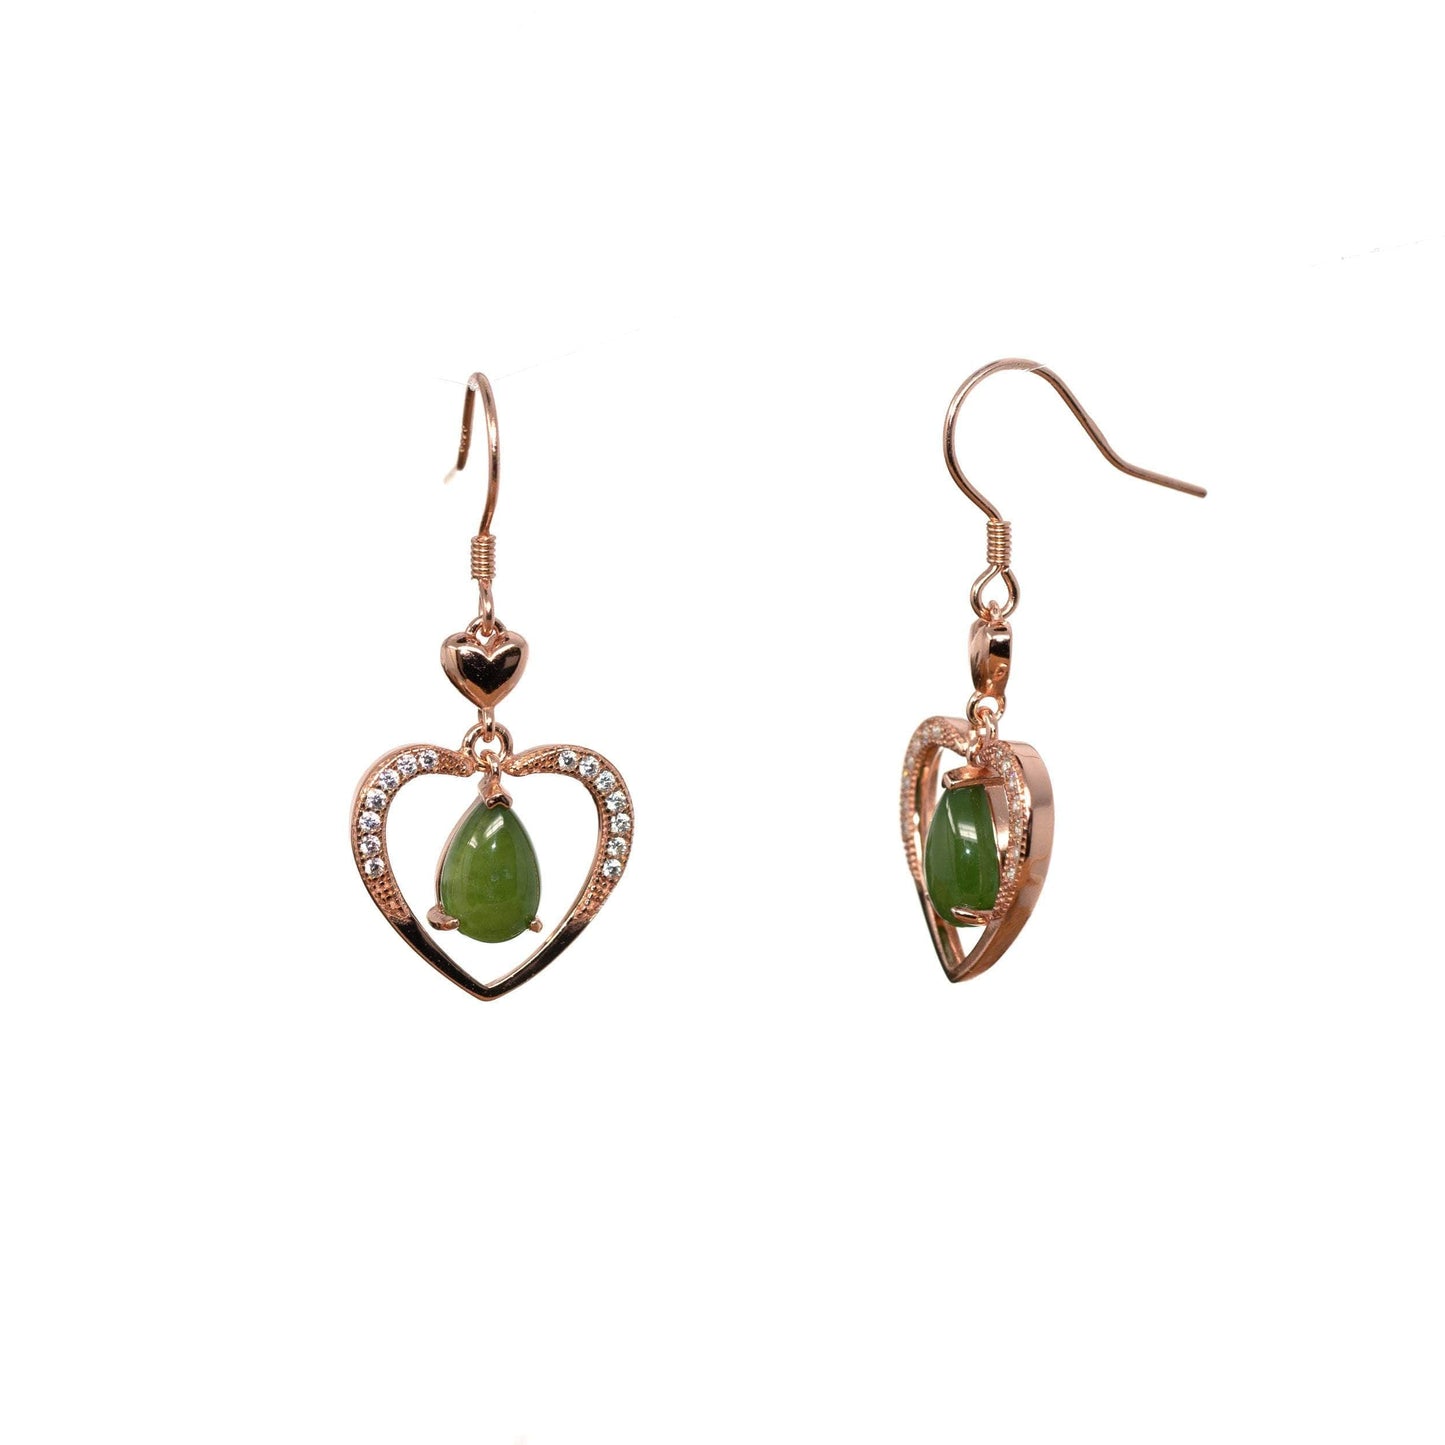 RealJade® "Love Earrings" Sterling Silver Genuine Nephrite Green Jade Dangle Earrings With CZ